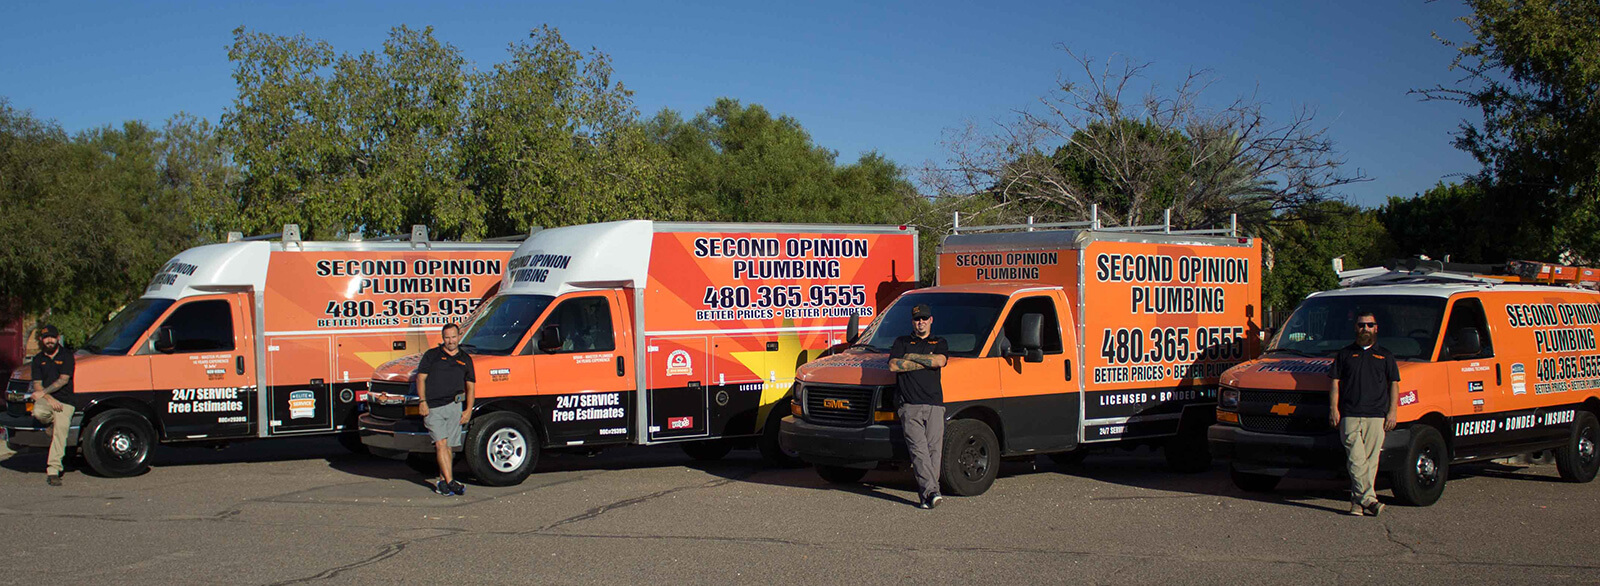 Professional Hot Water Heater Services in Gilbert, AZ